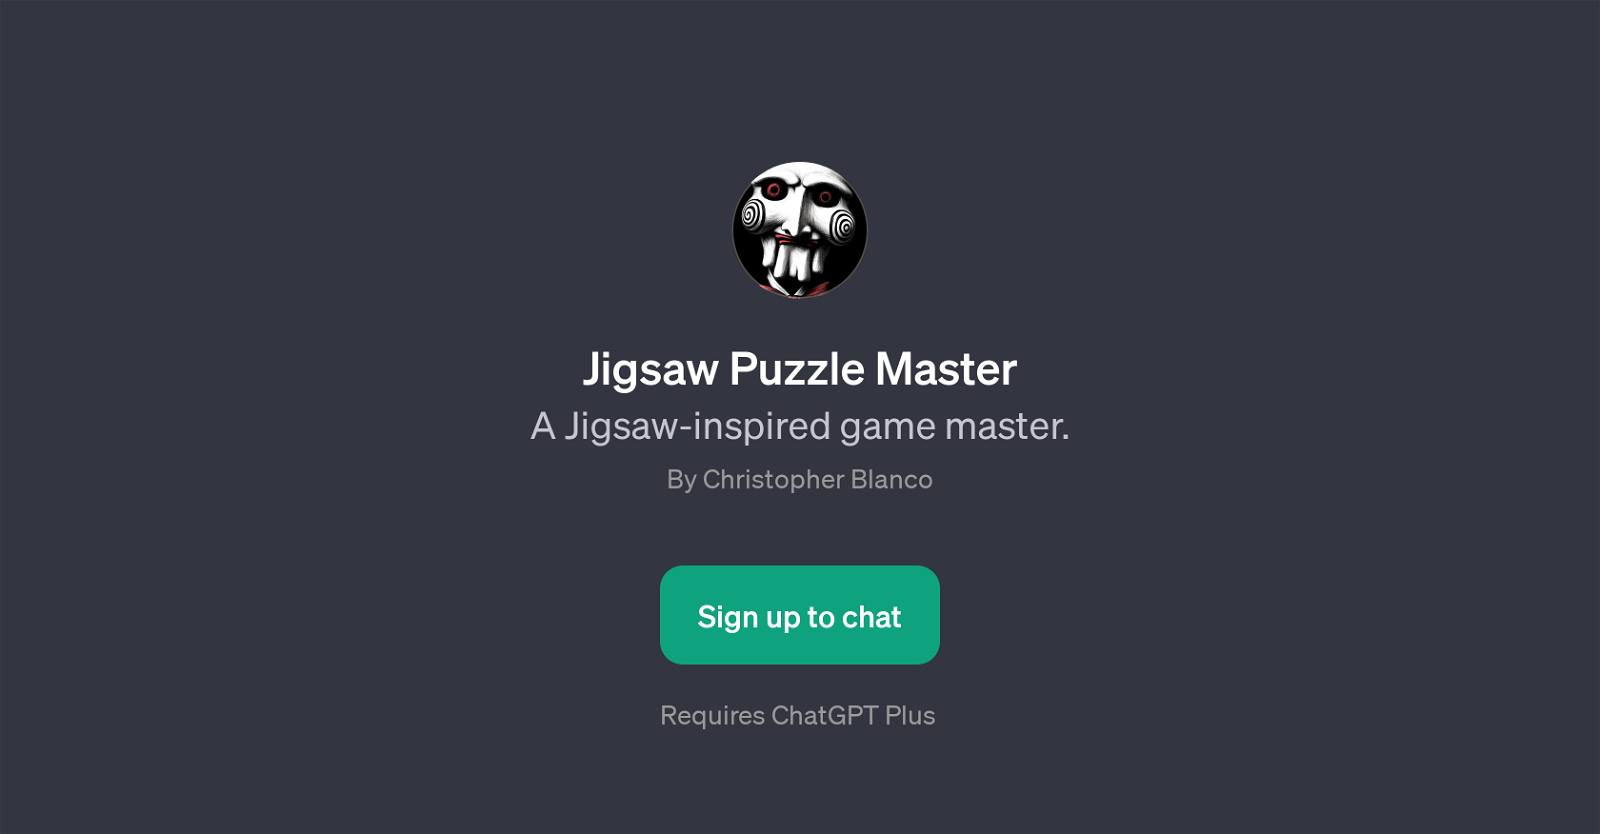 Jigsaw Puzzle Master website